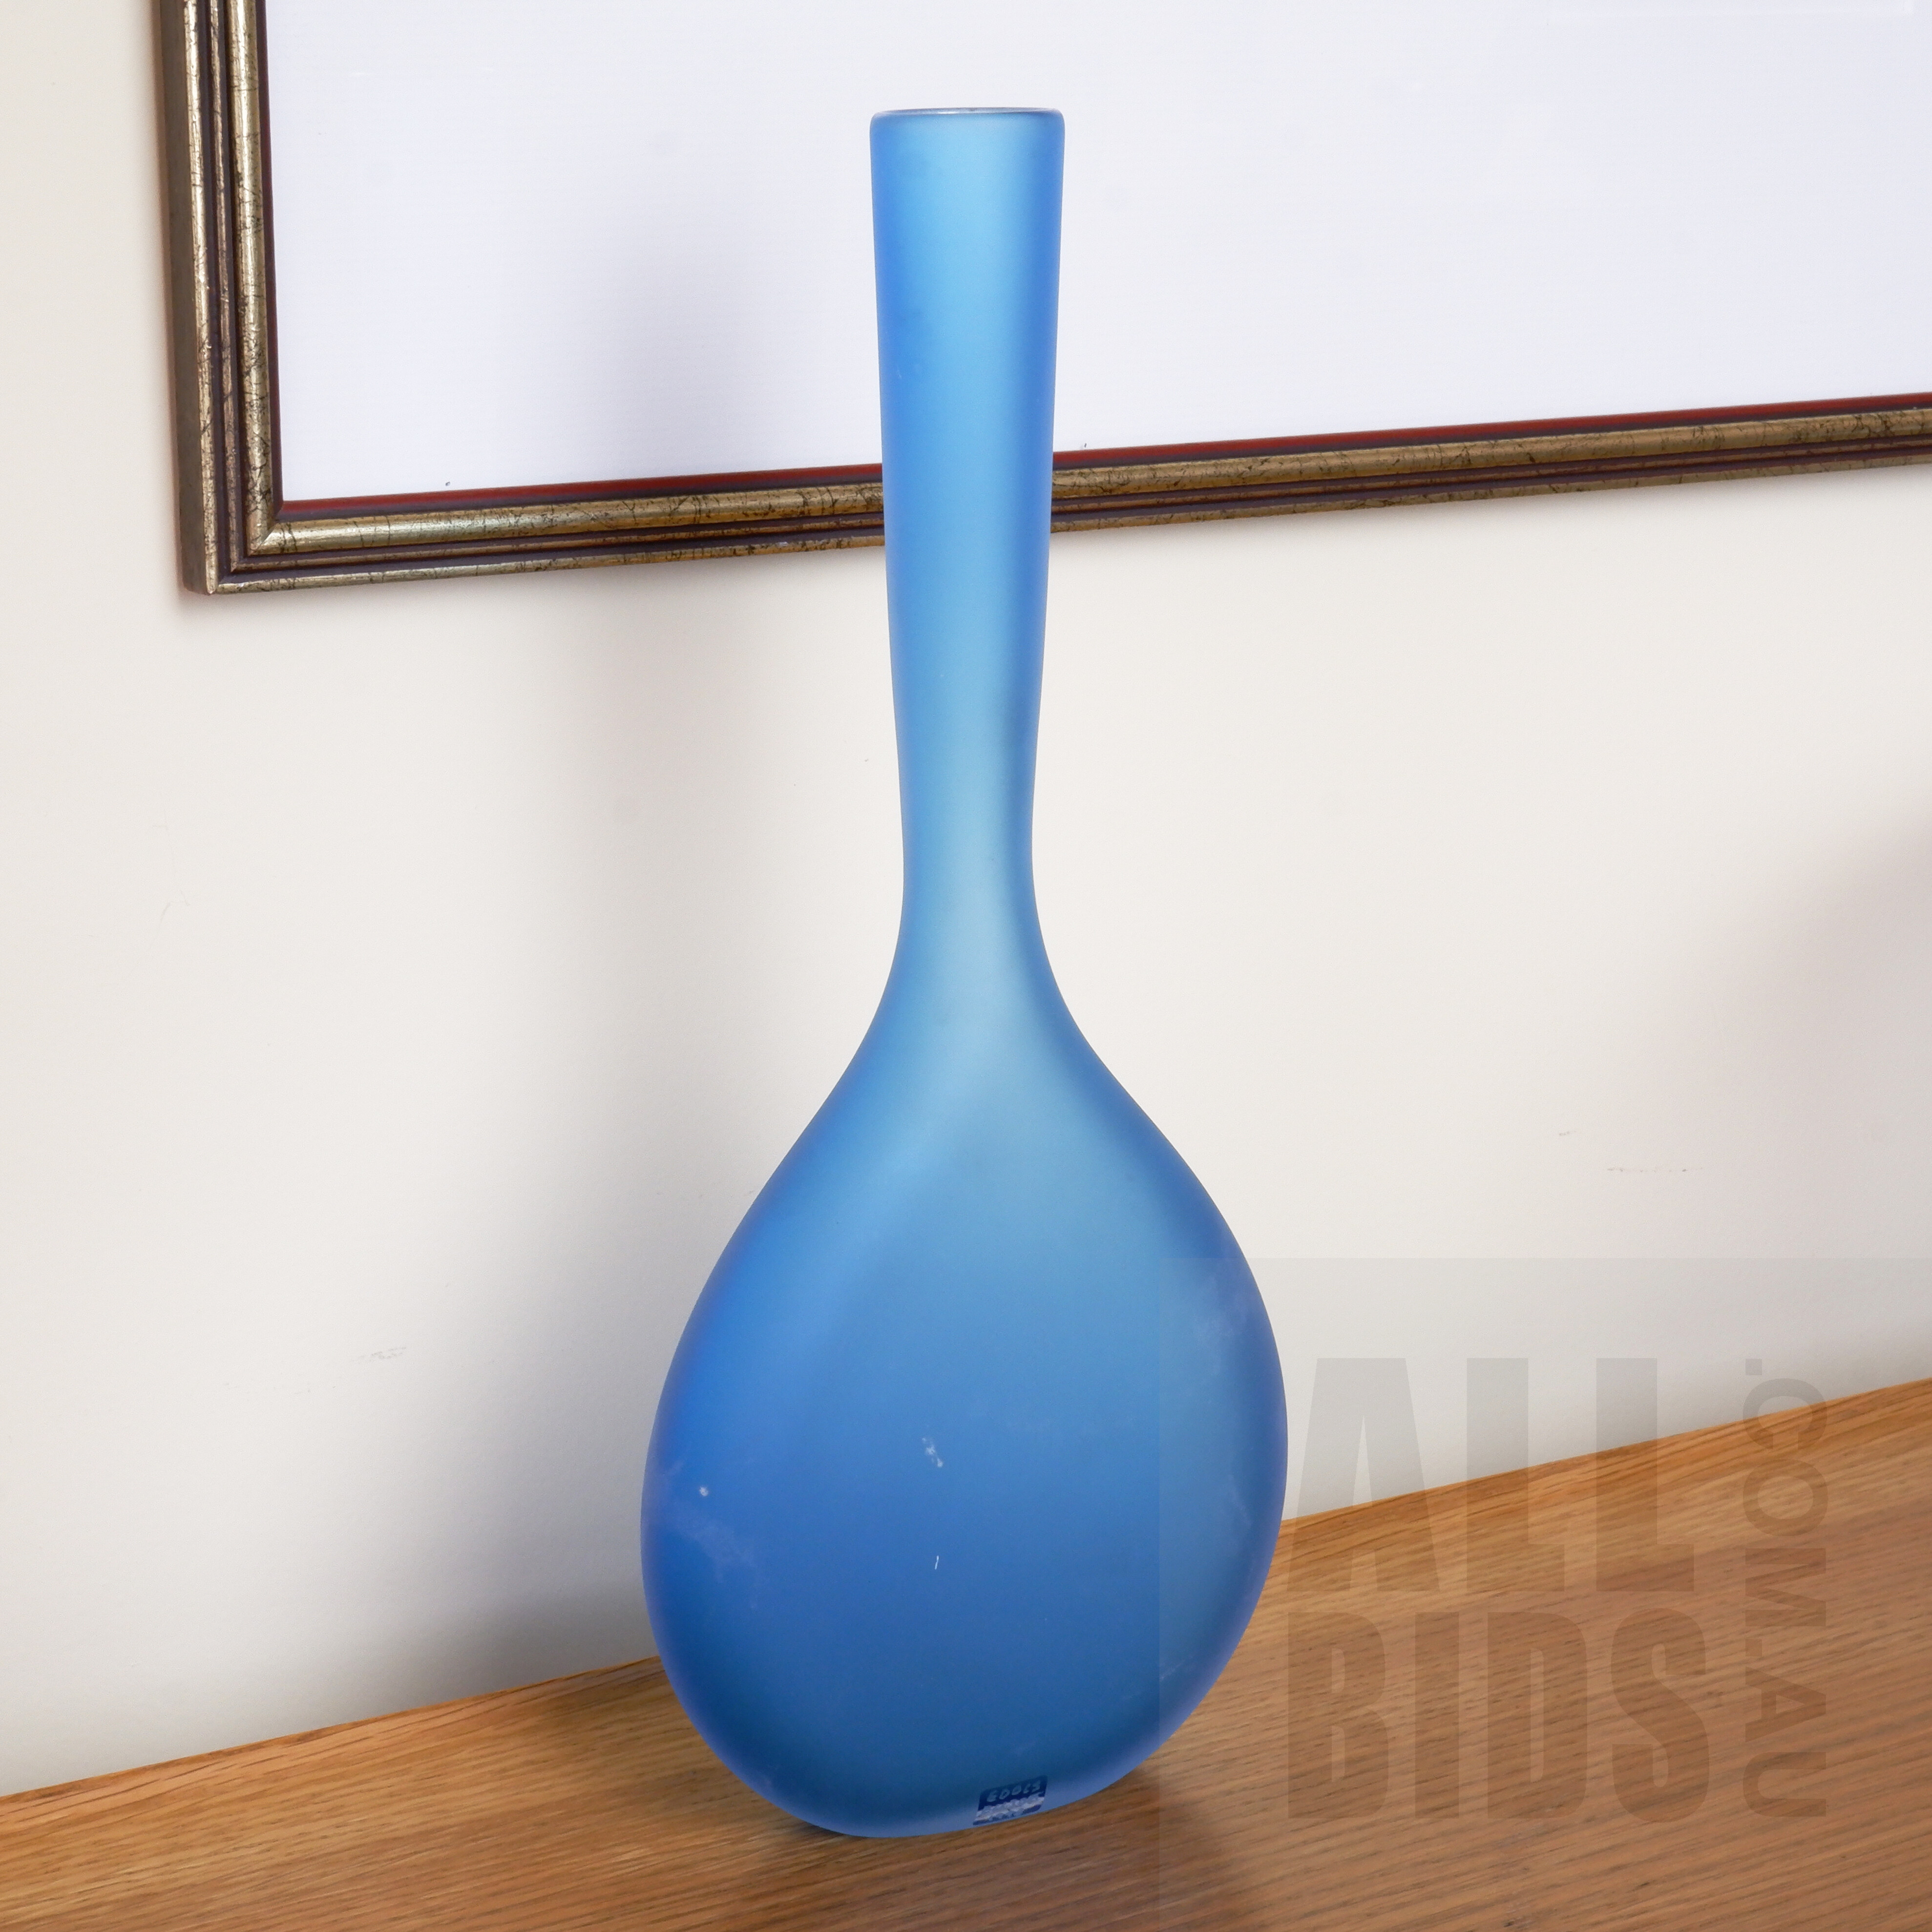 'Benjamin Edols and Kathy Elliott, Slender Blown Glass Vase 1996'